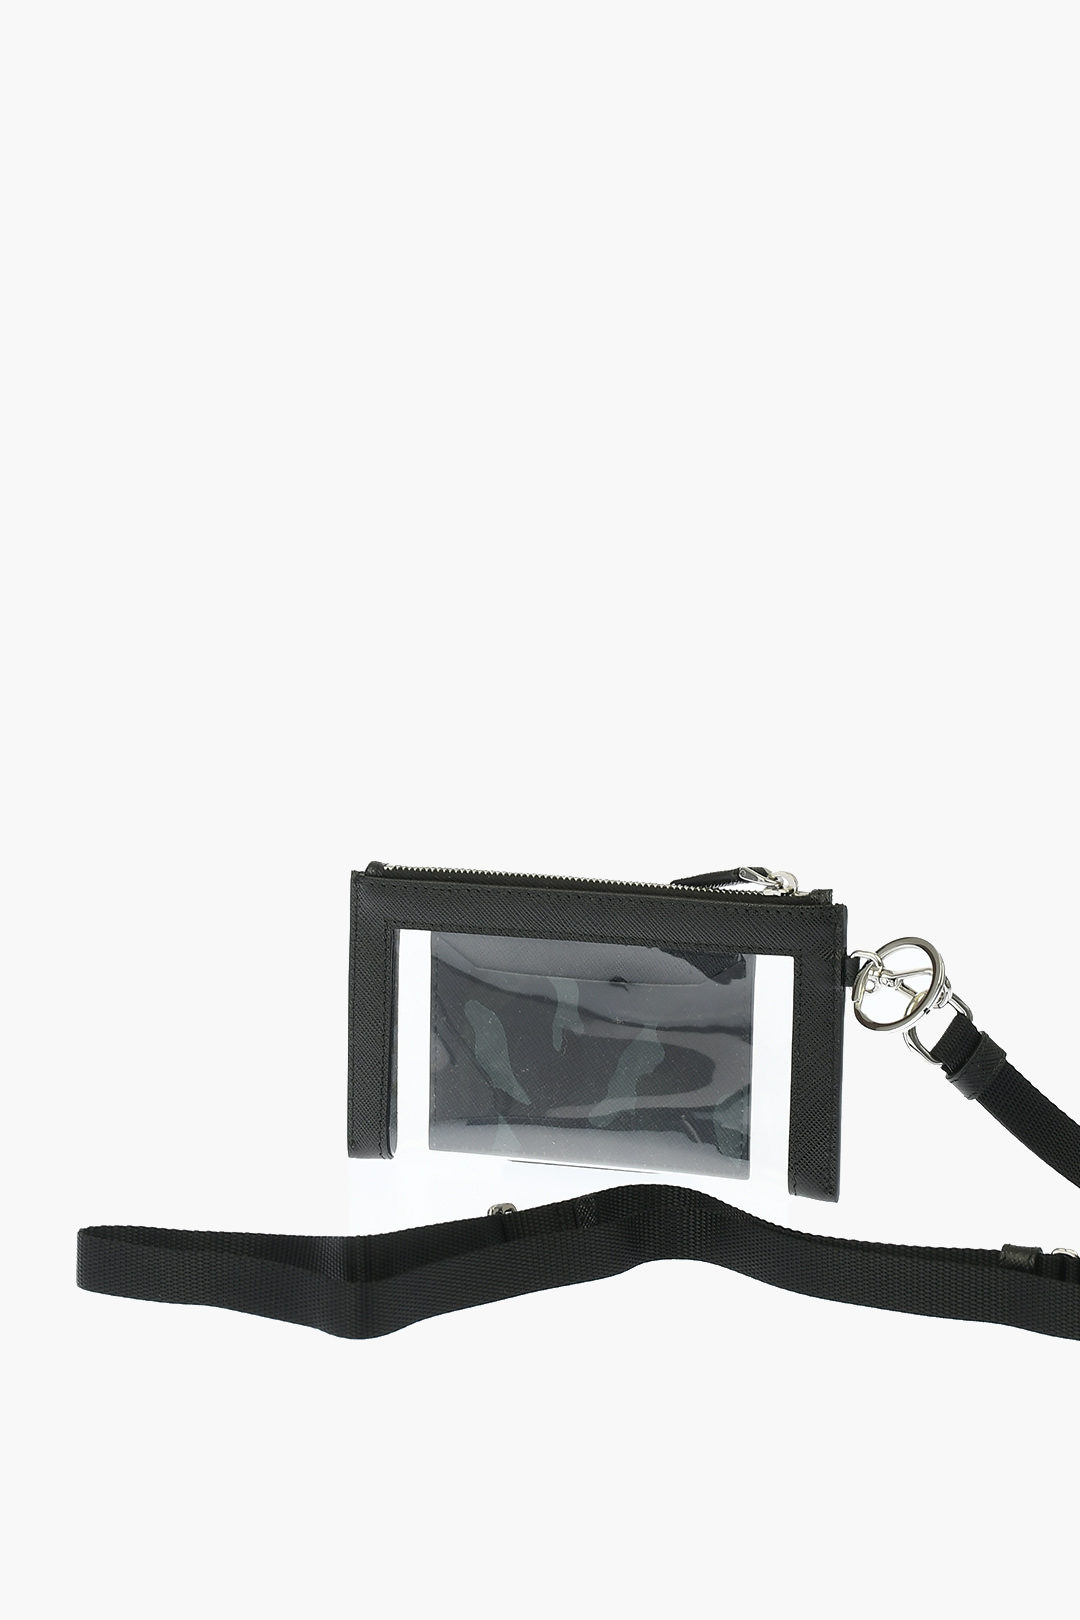 Prada Saffiano Leather Card Holder With Shoulder Strap in Black